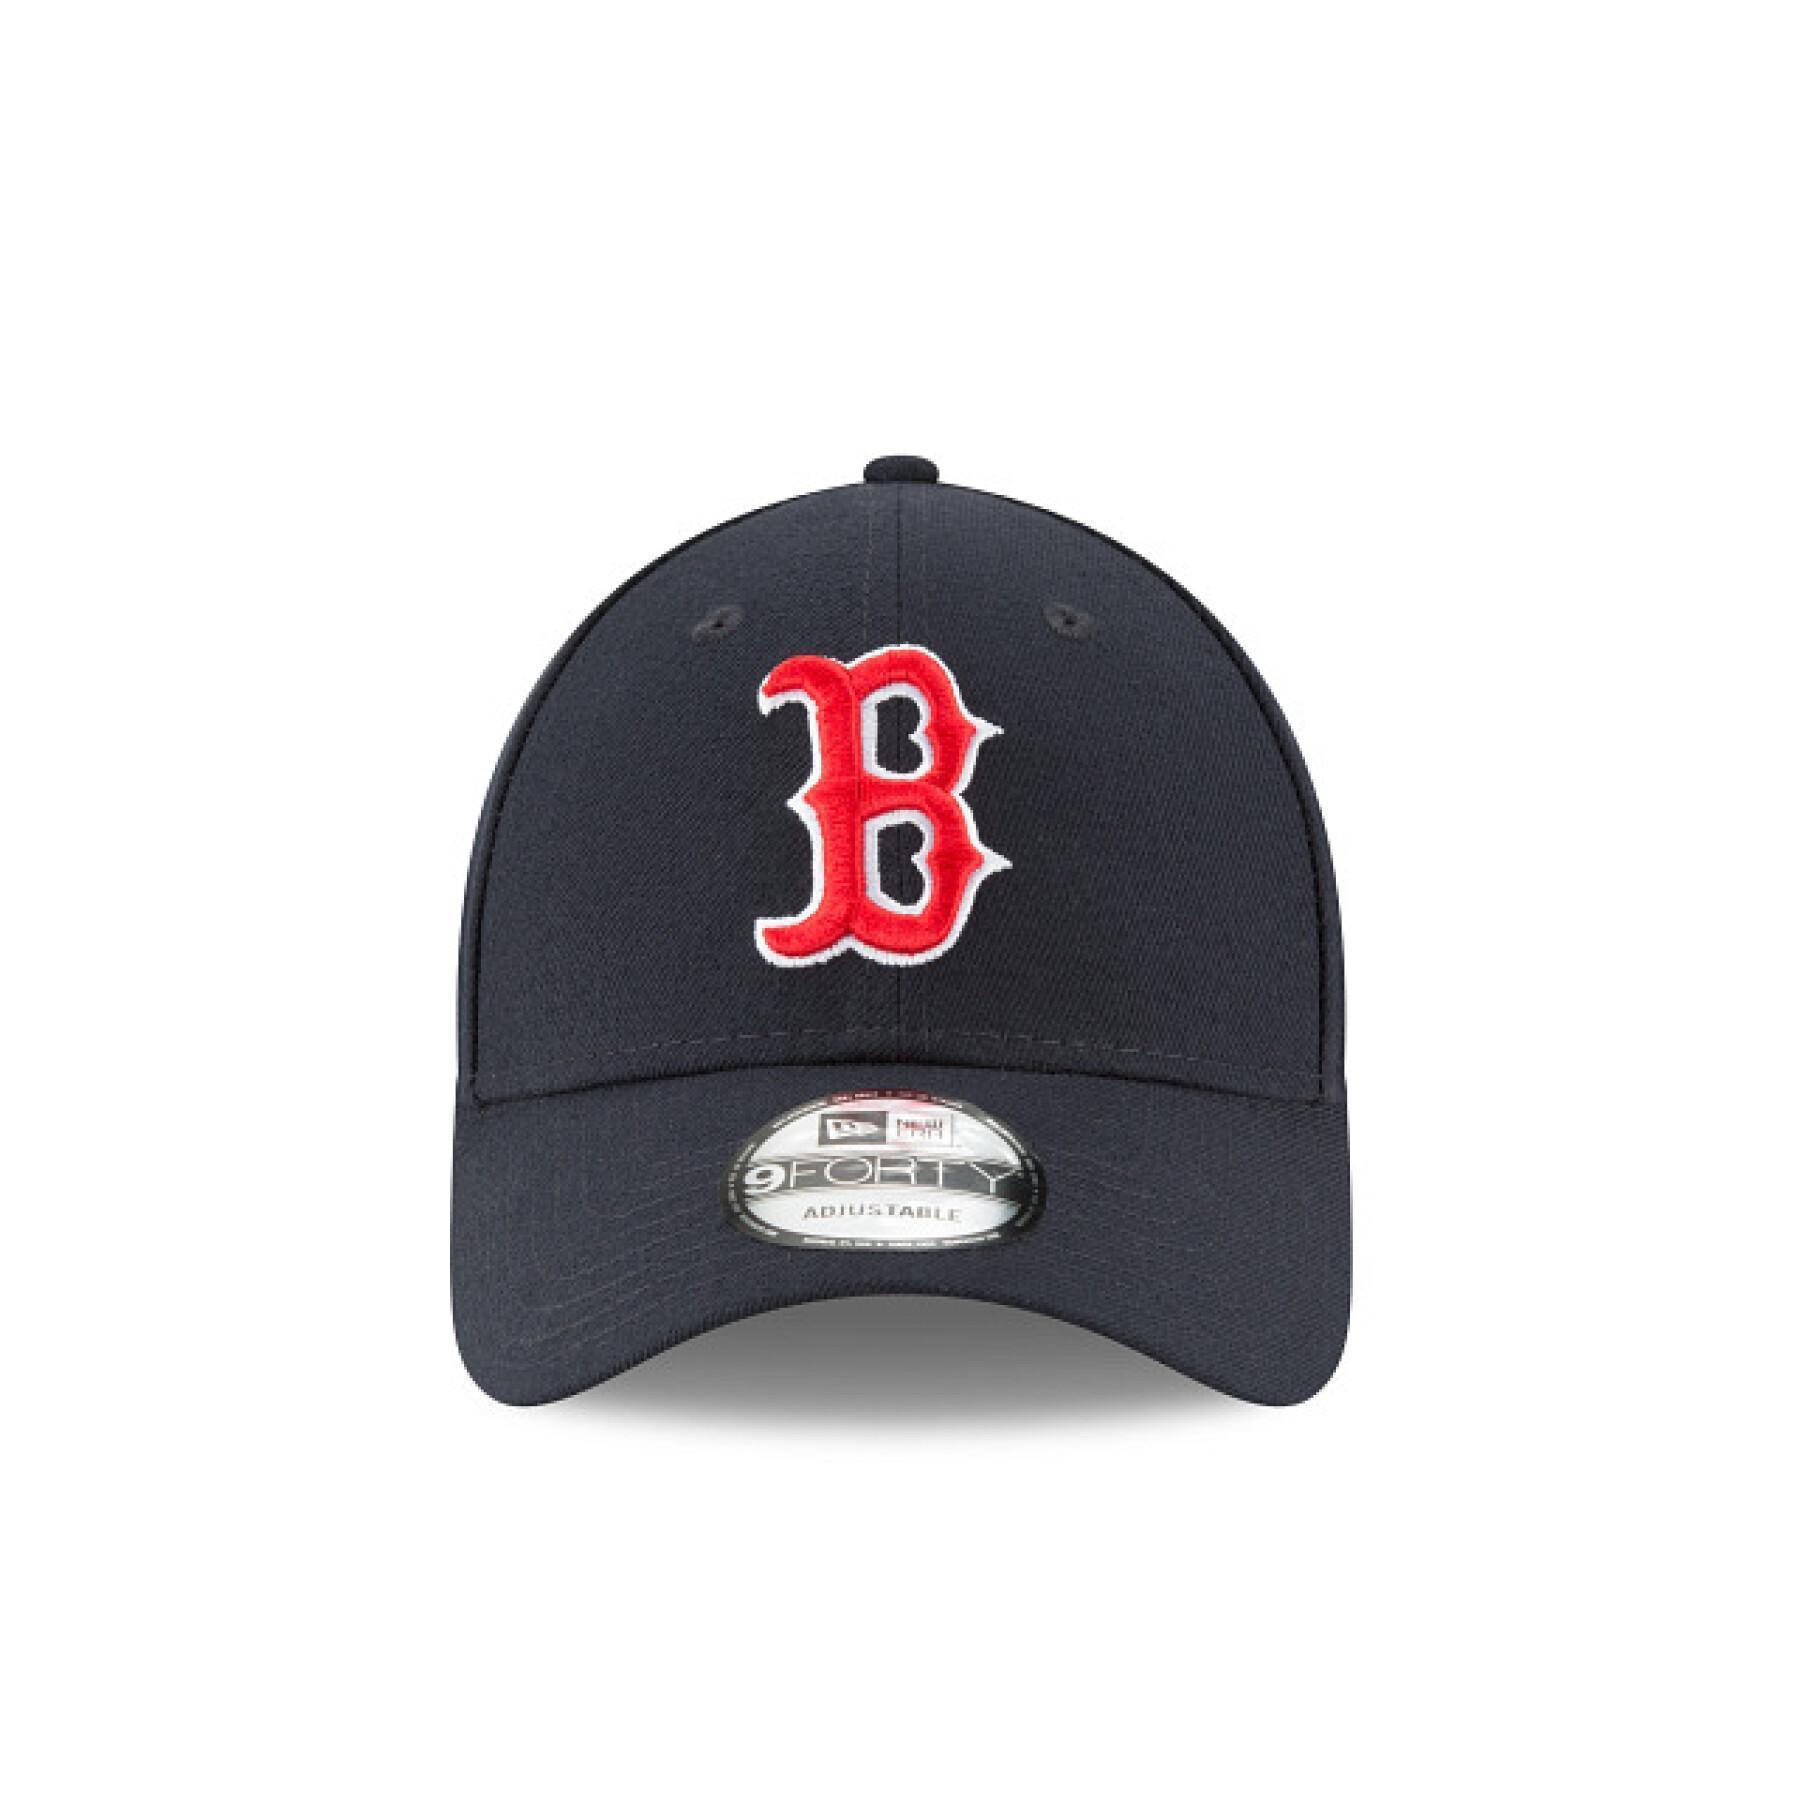 Cap Boston Red Sox